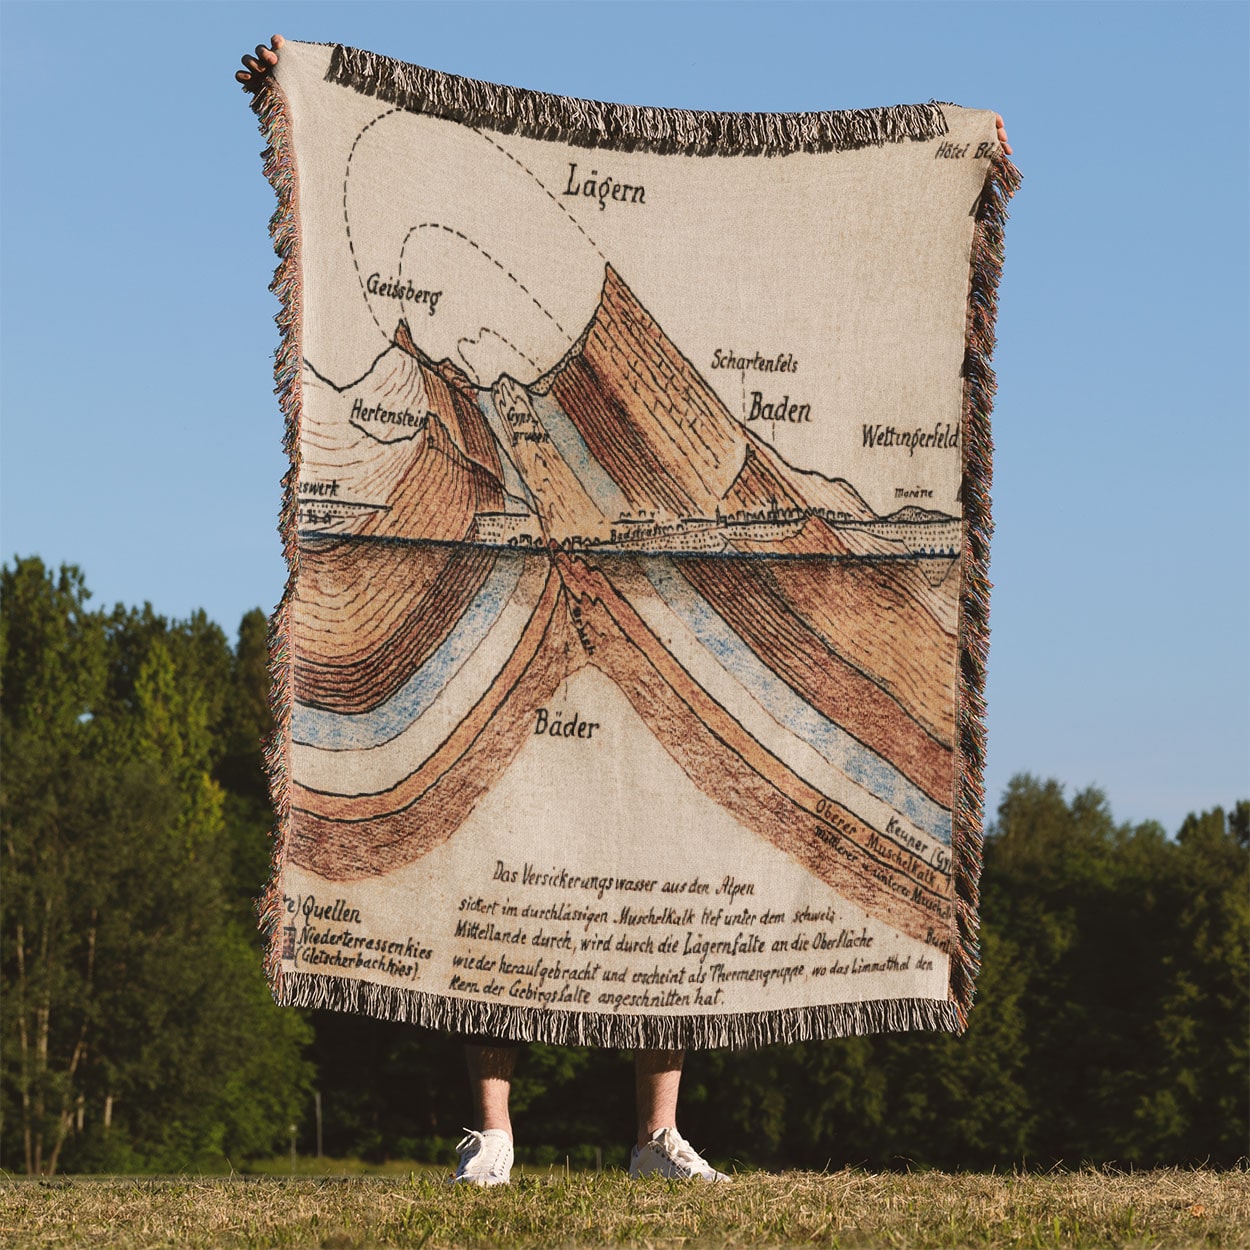 Vintage Scientific Woven Blanket Held Up Outside